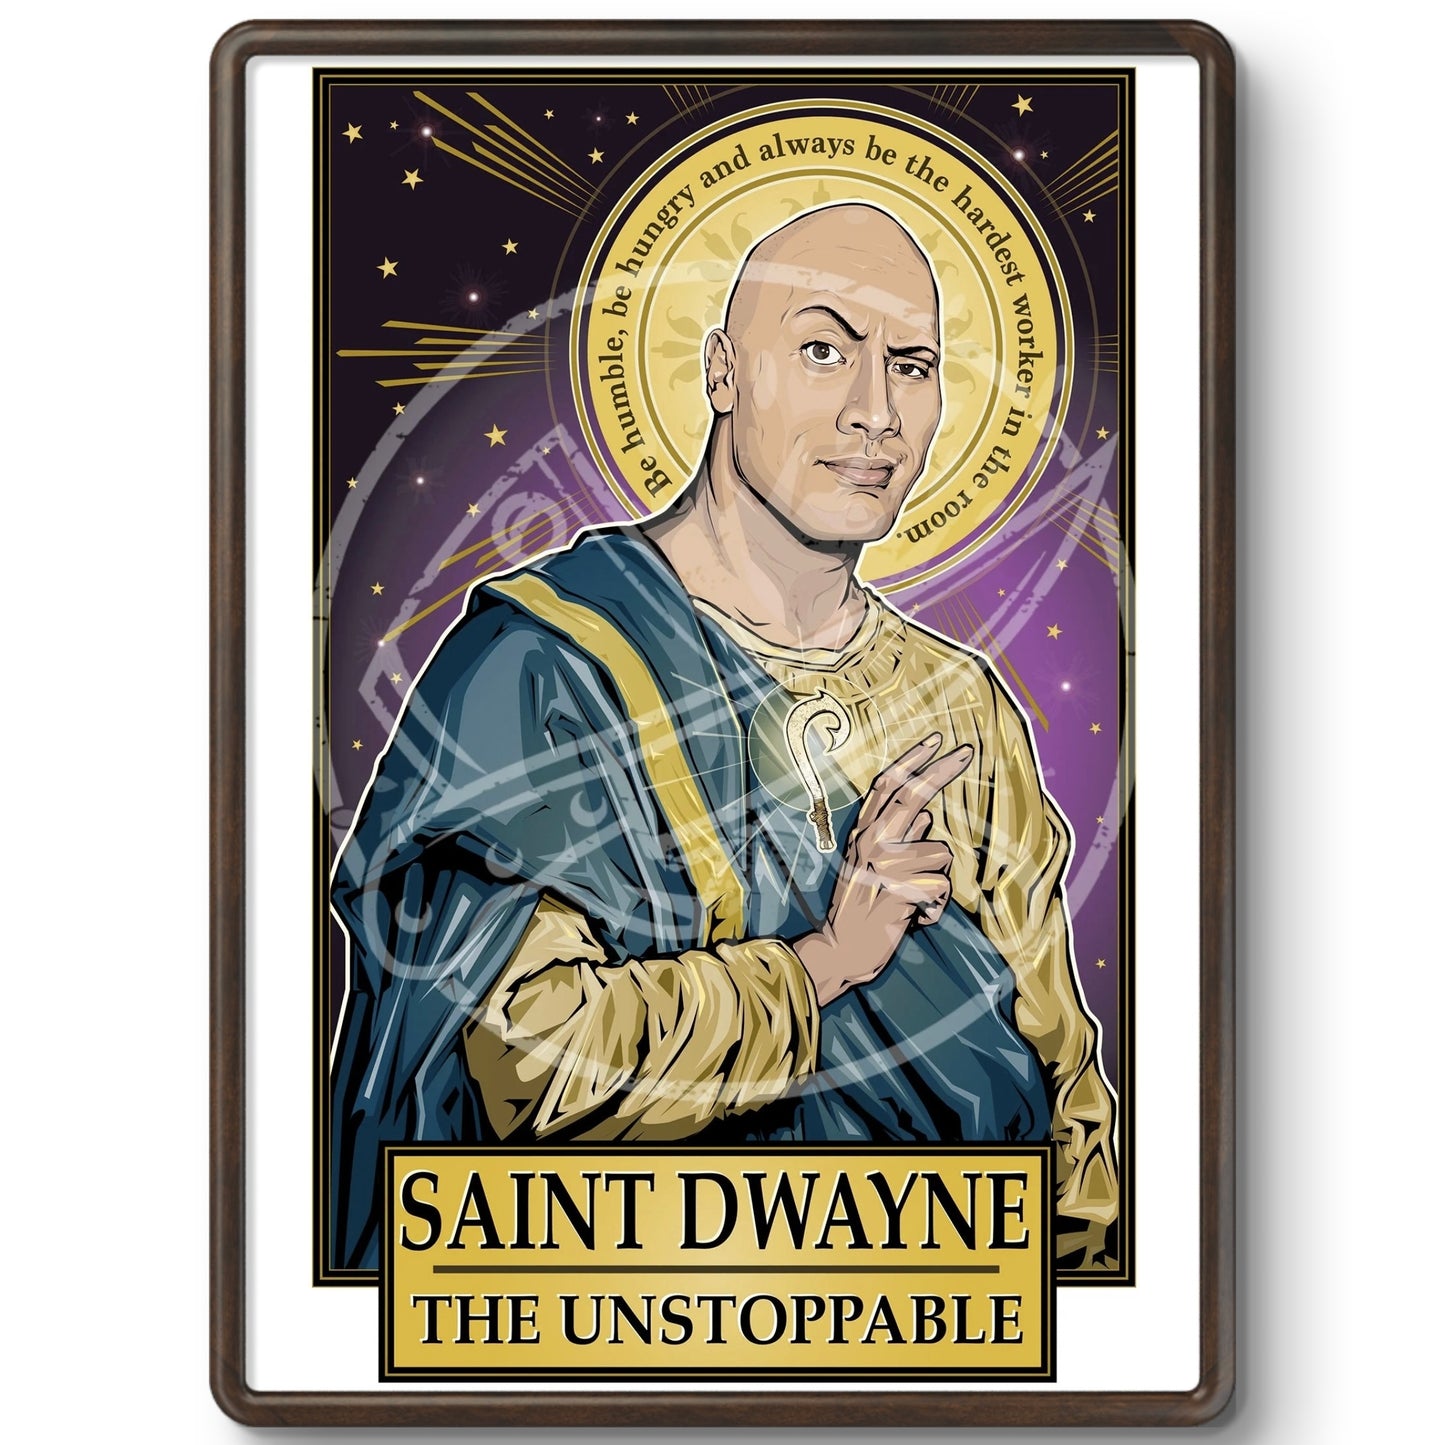 Saint Dwayne The Unstoppable Poster Cleaverandblade.com